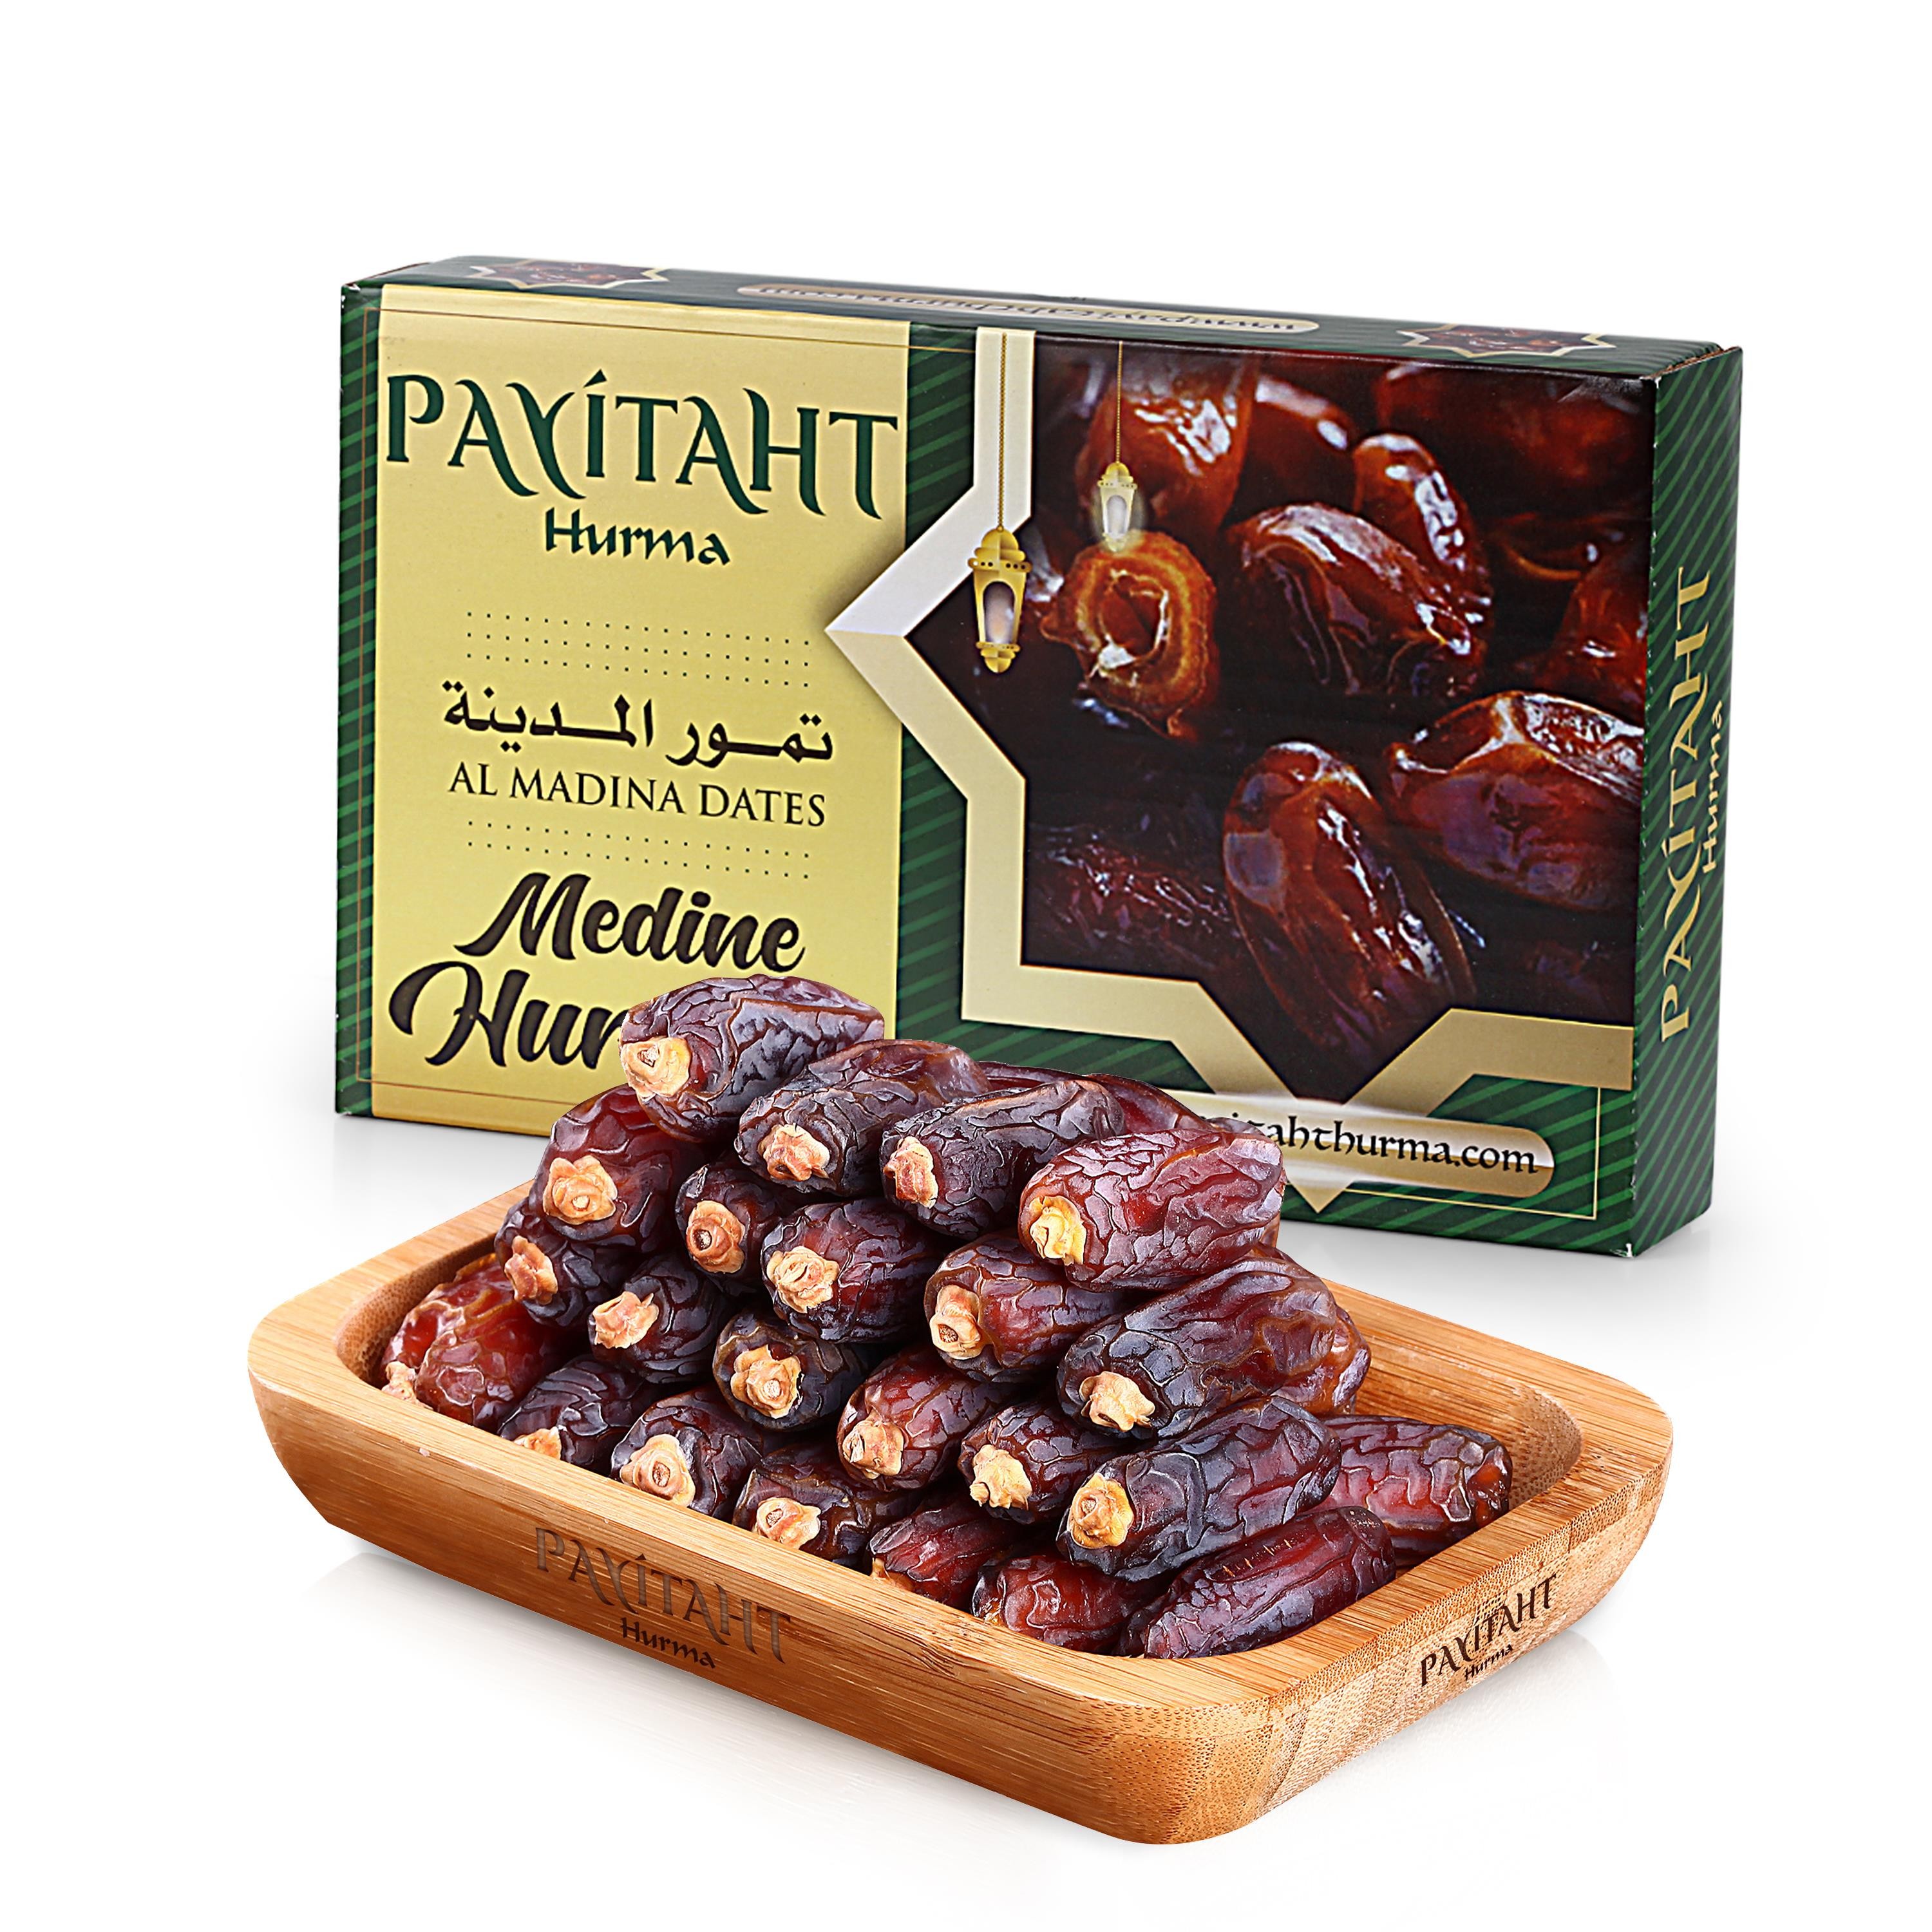  Payitaht Hurma Medina Mebrum Luxury Dates New Harvest 1kg Package